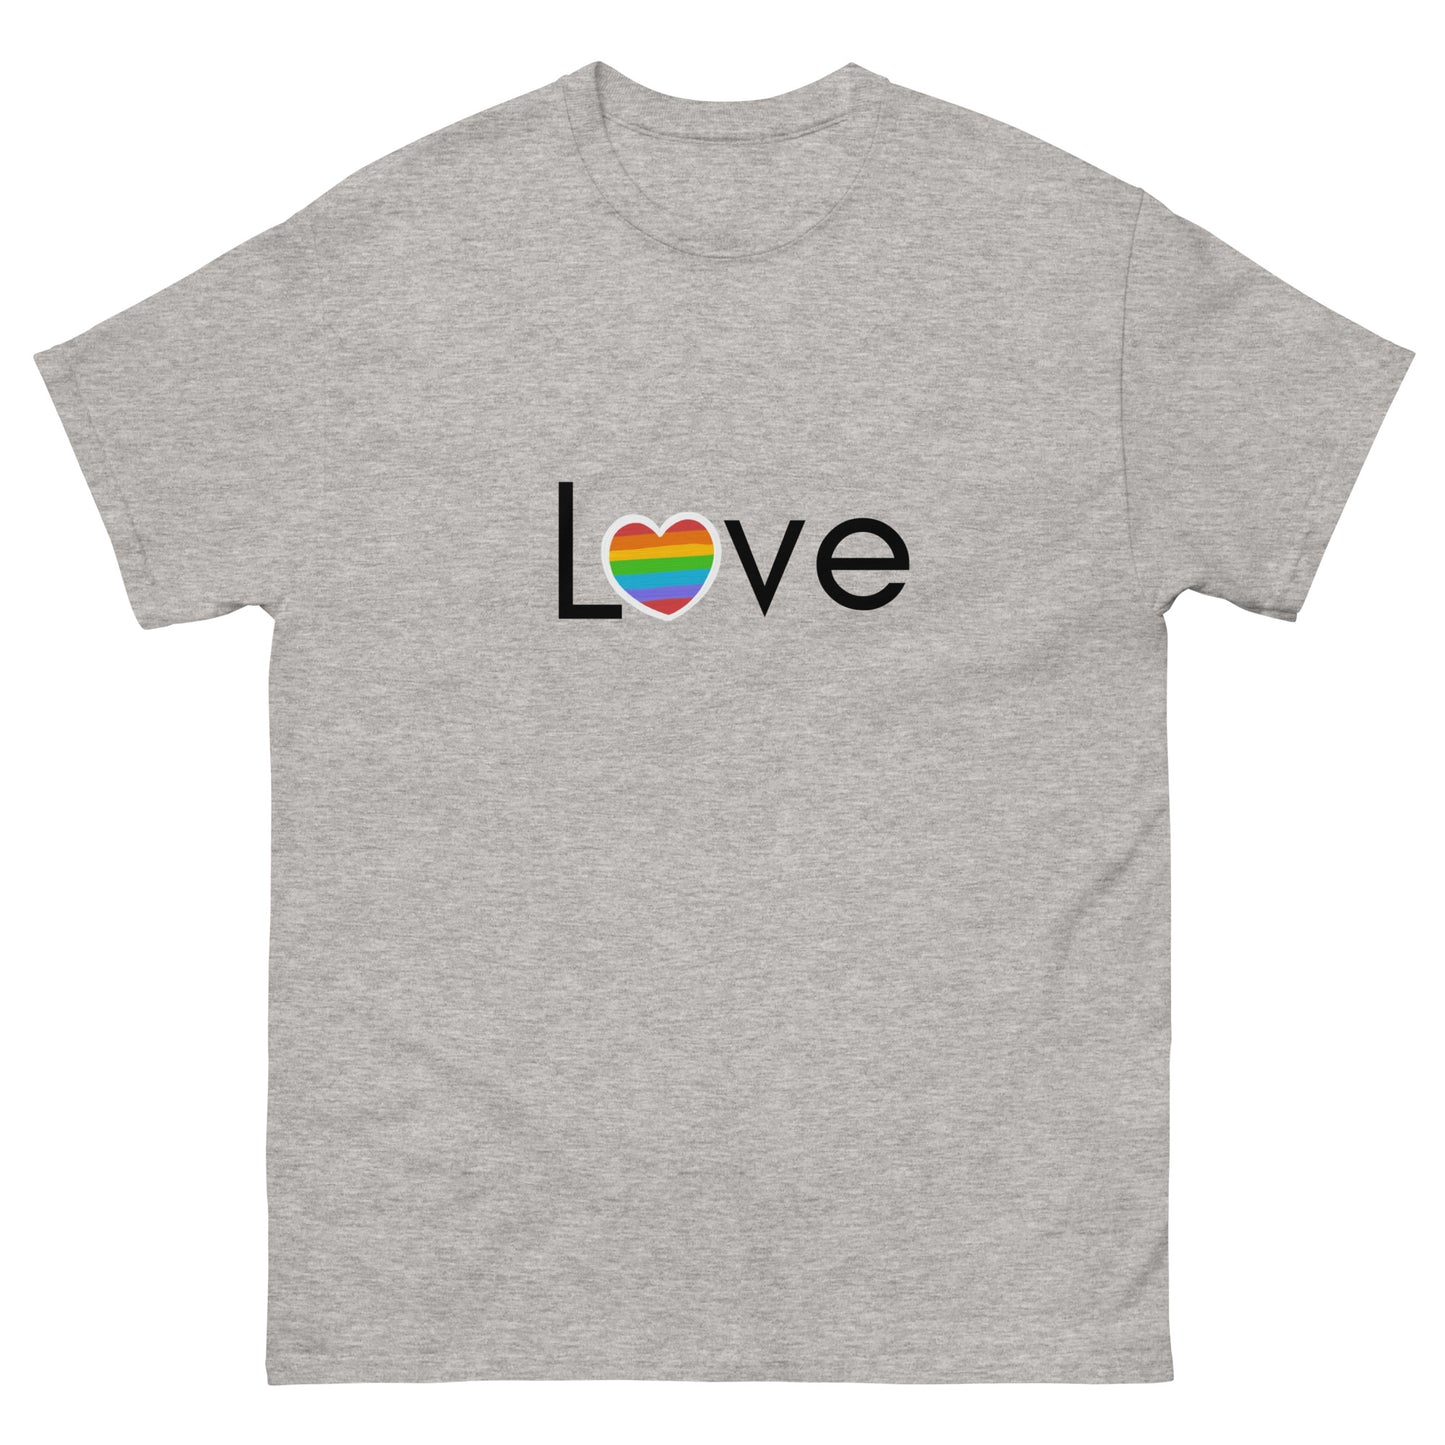 Love T-Shirt - The Good Life Vibe